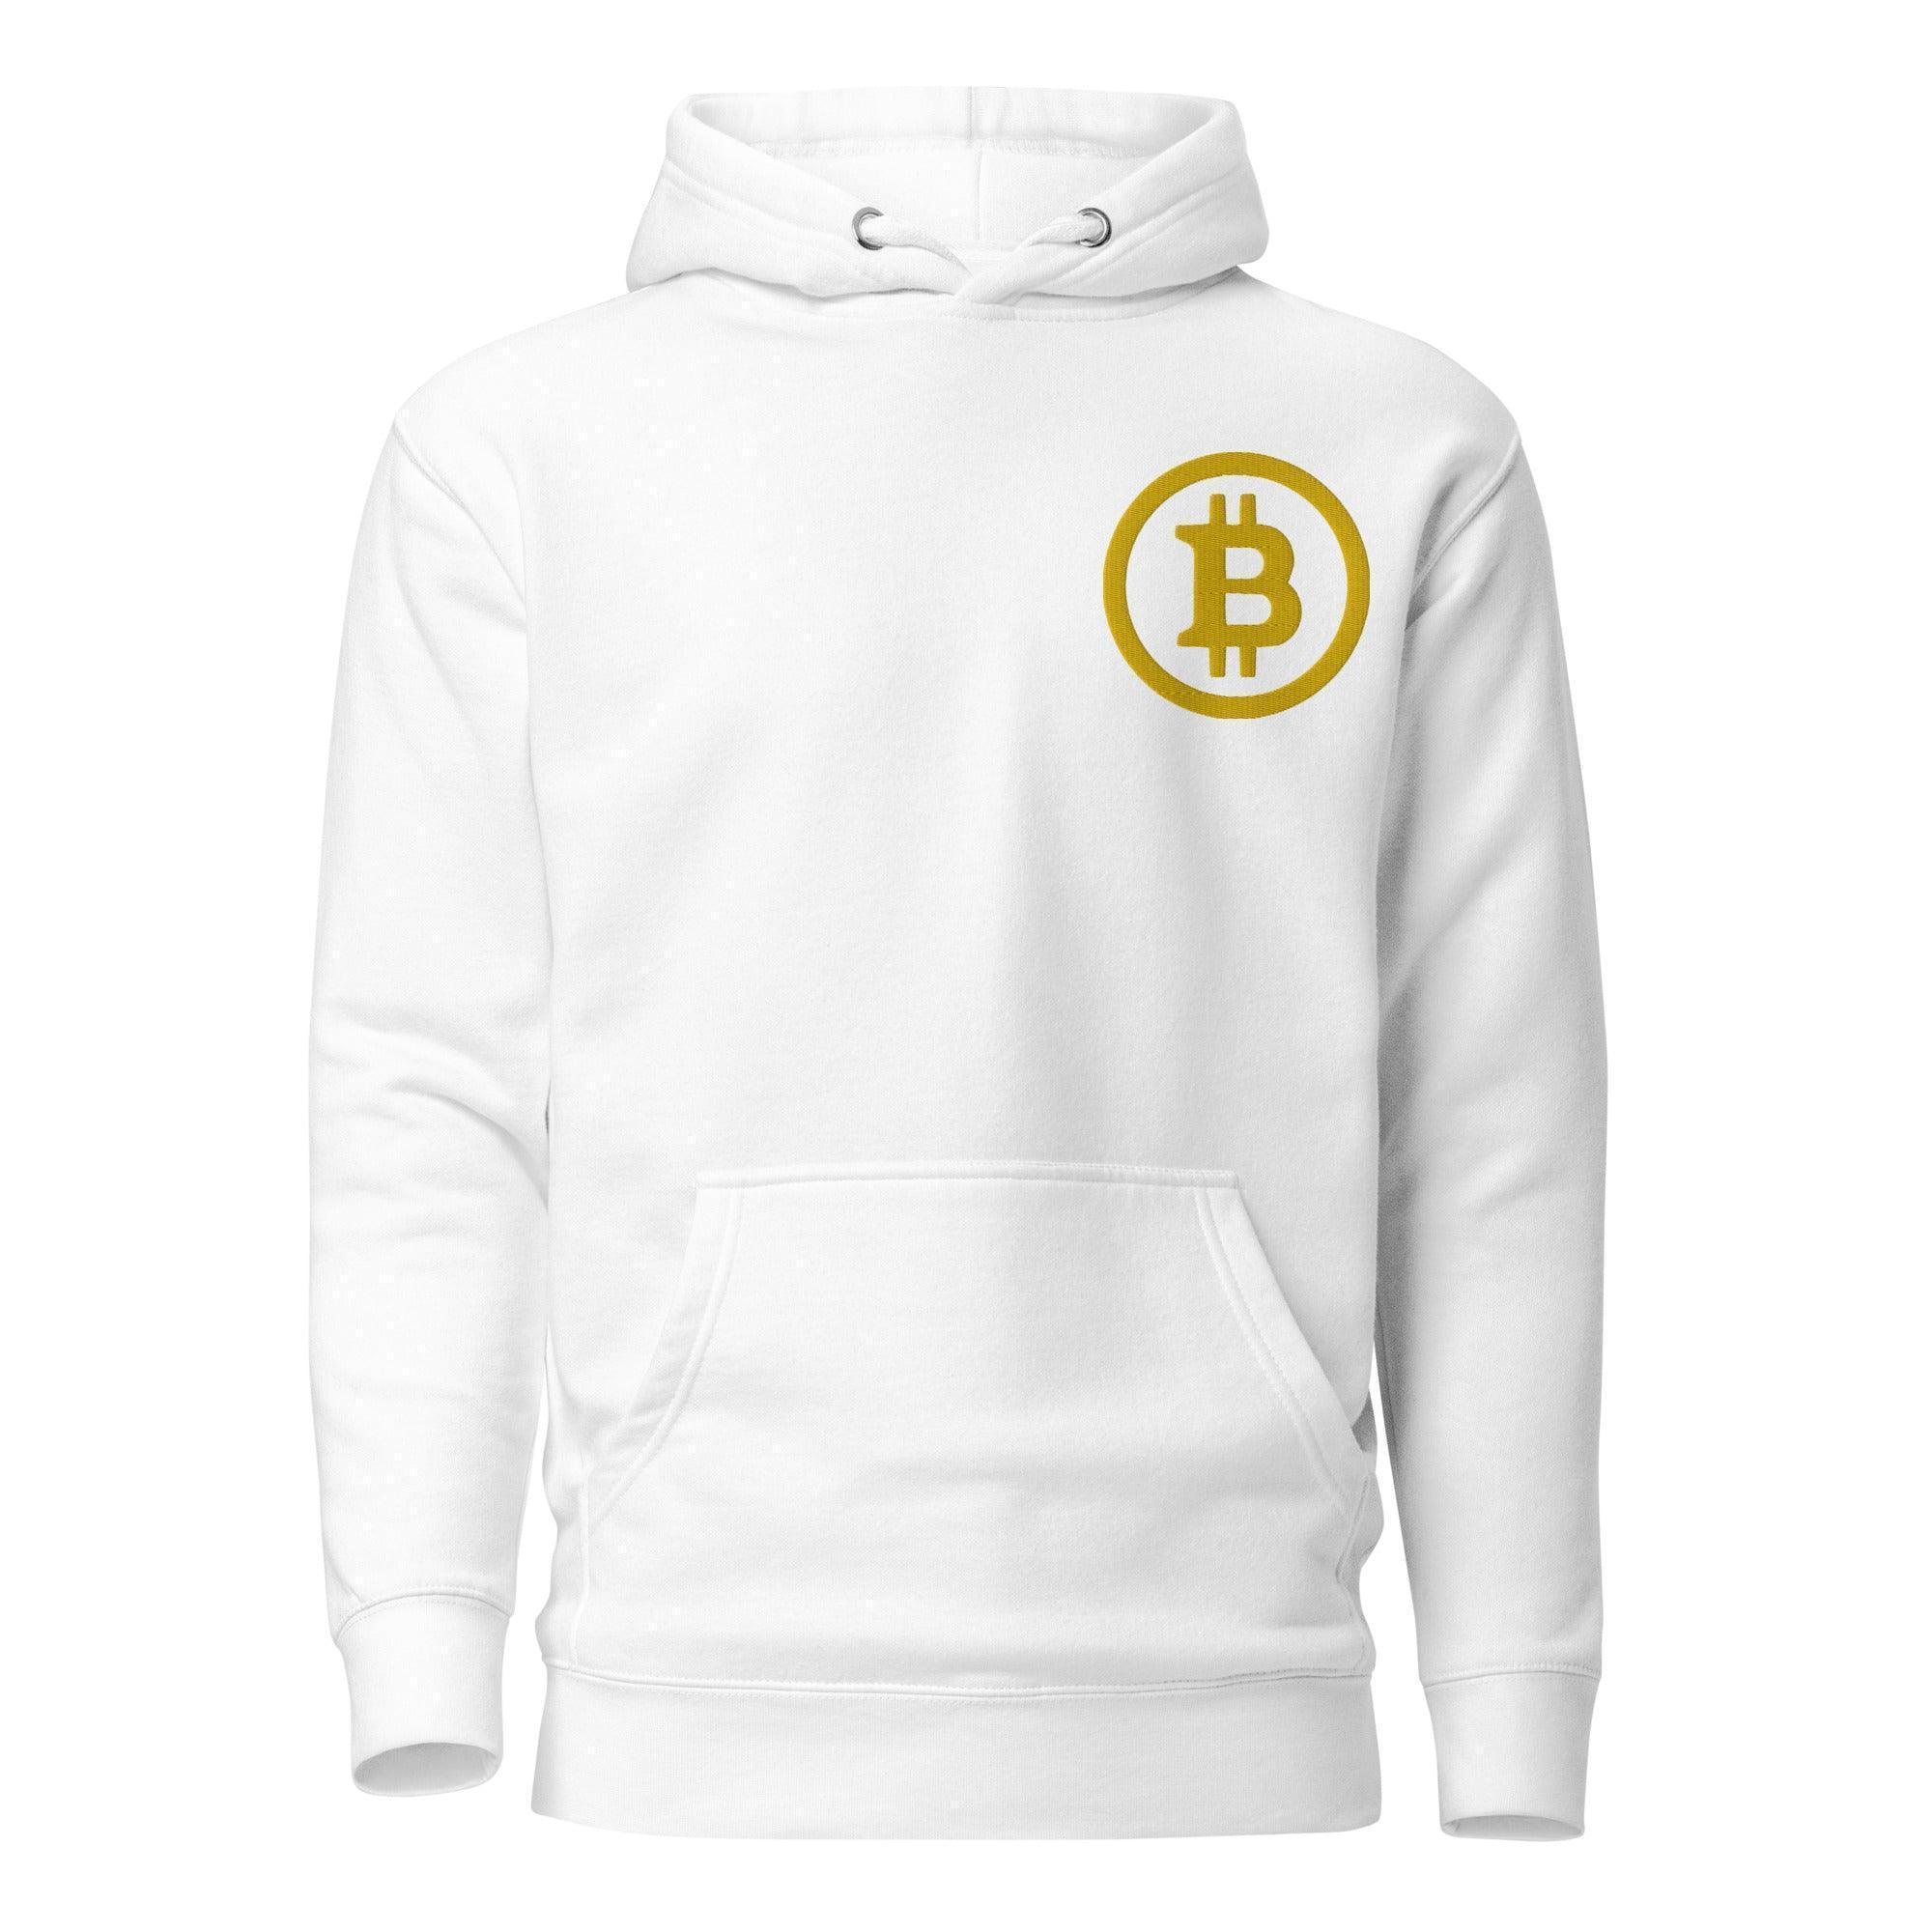 Bitcoin Crypto Sweatsuit - InvestmenTees